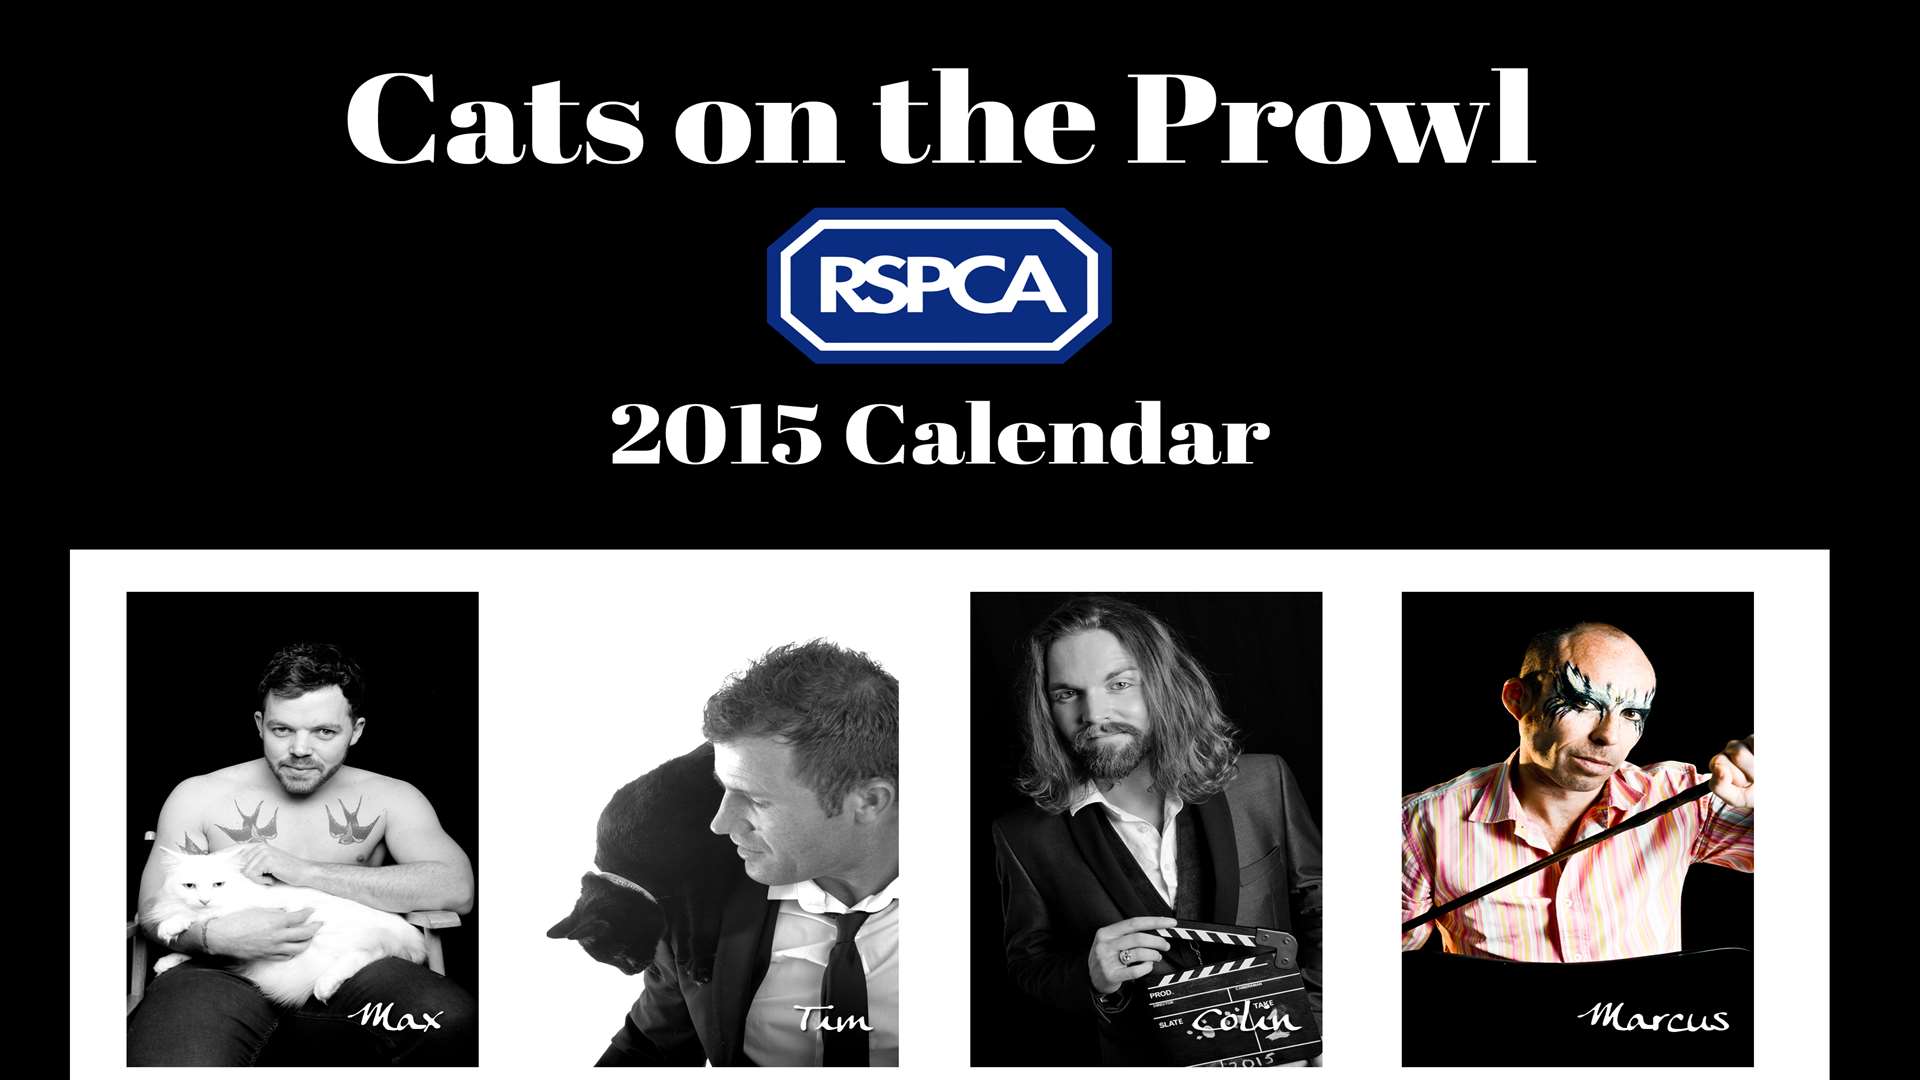 The calendar is raising money for the RSPCA cattery in Ashford